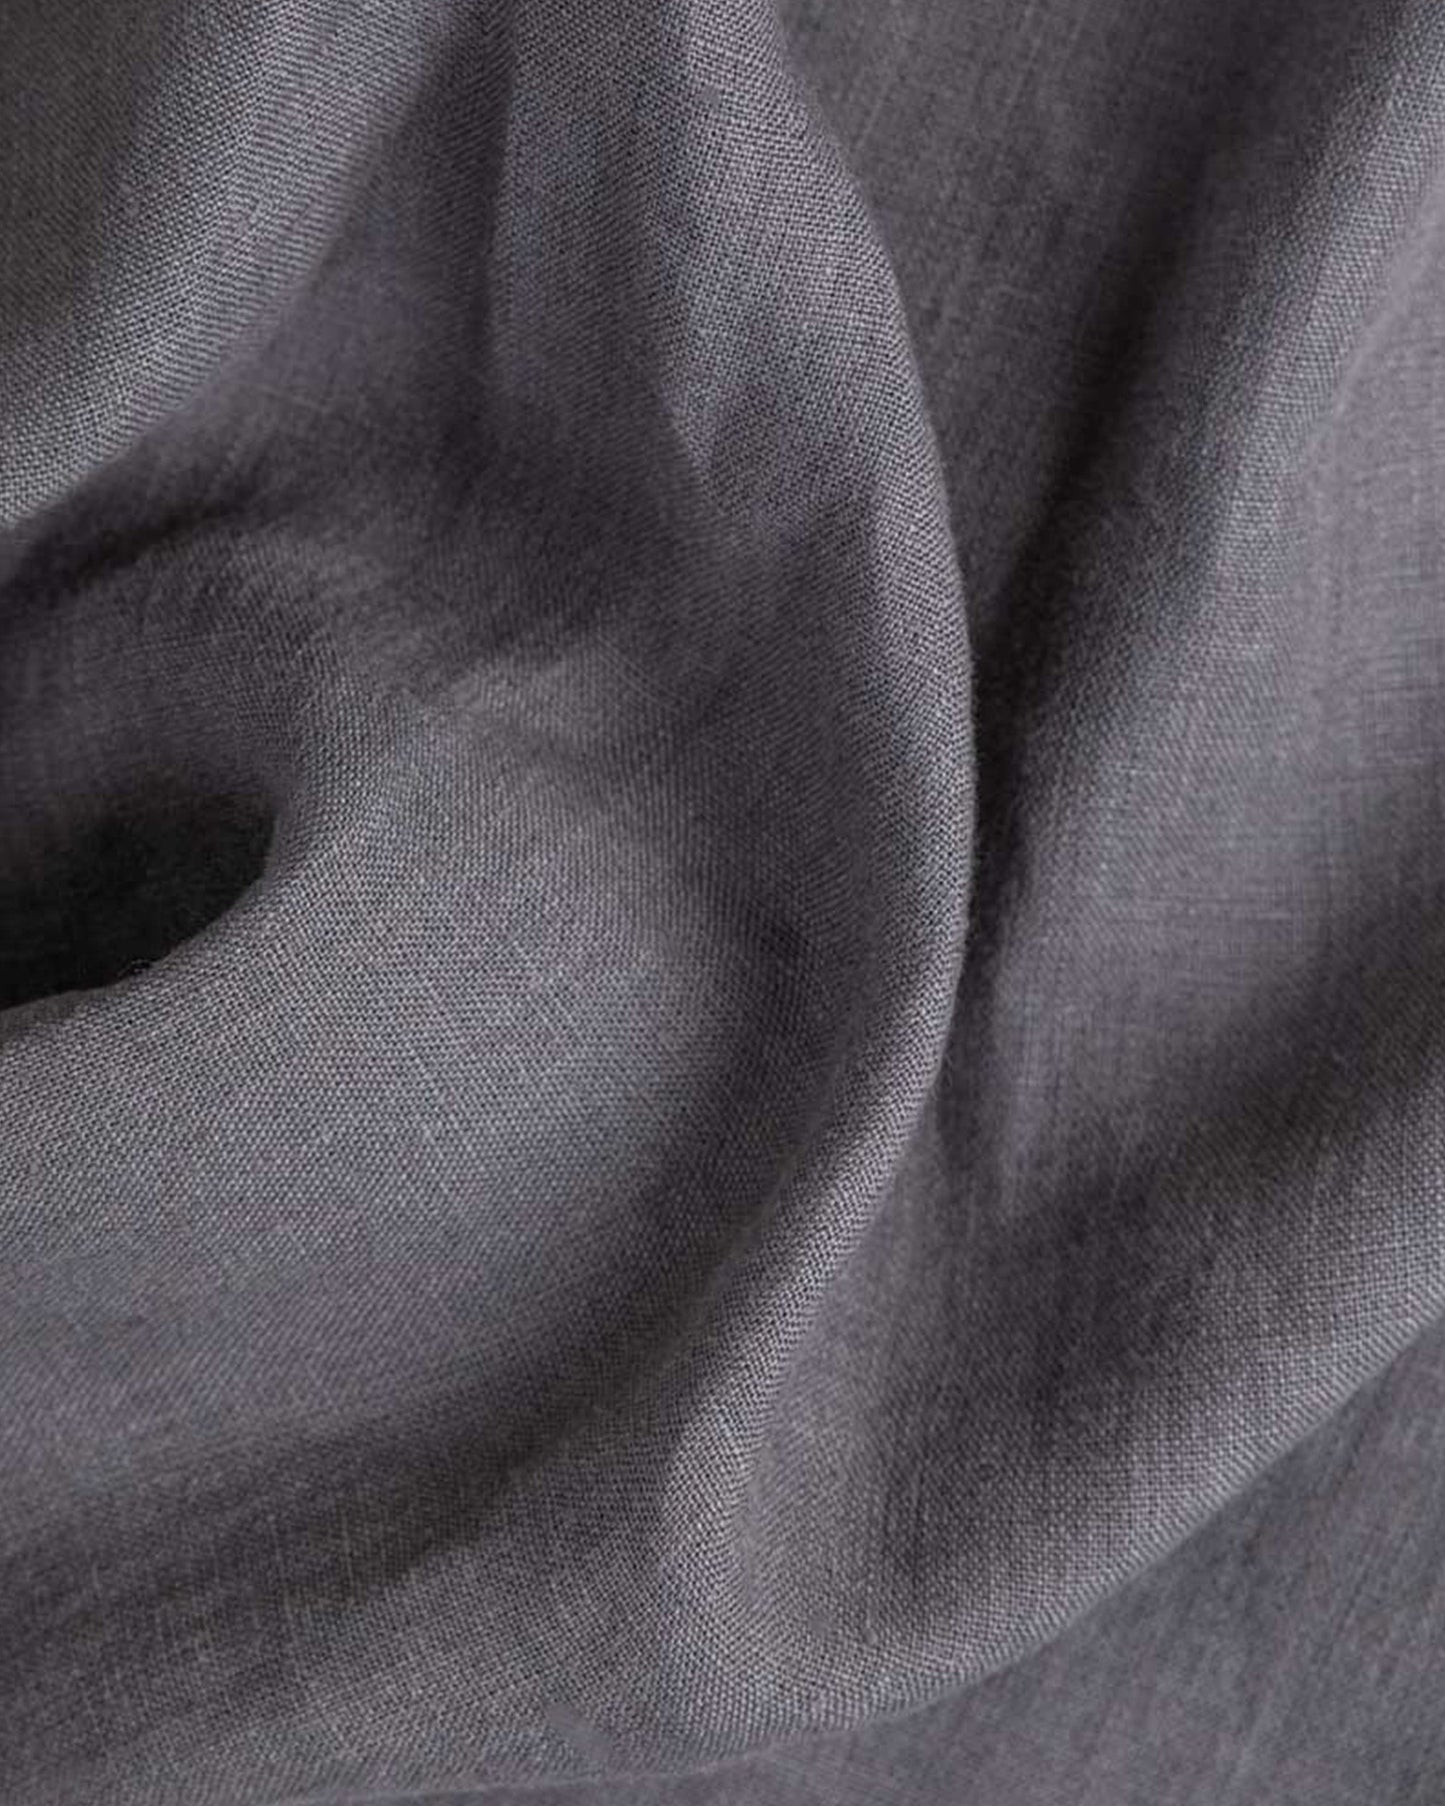 Charcoal gray linen placemat set of 2 - MagicLinen